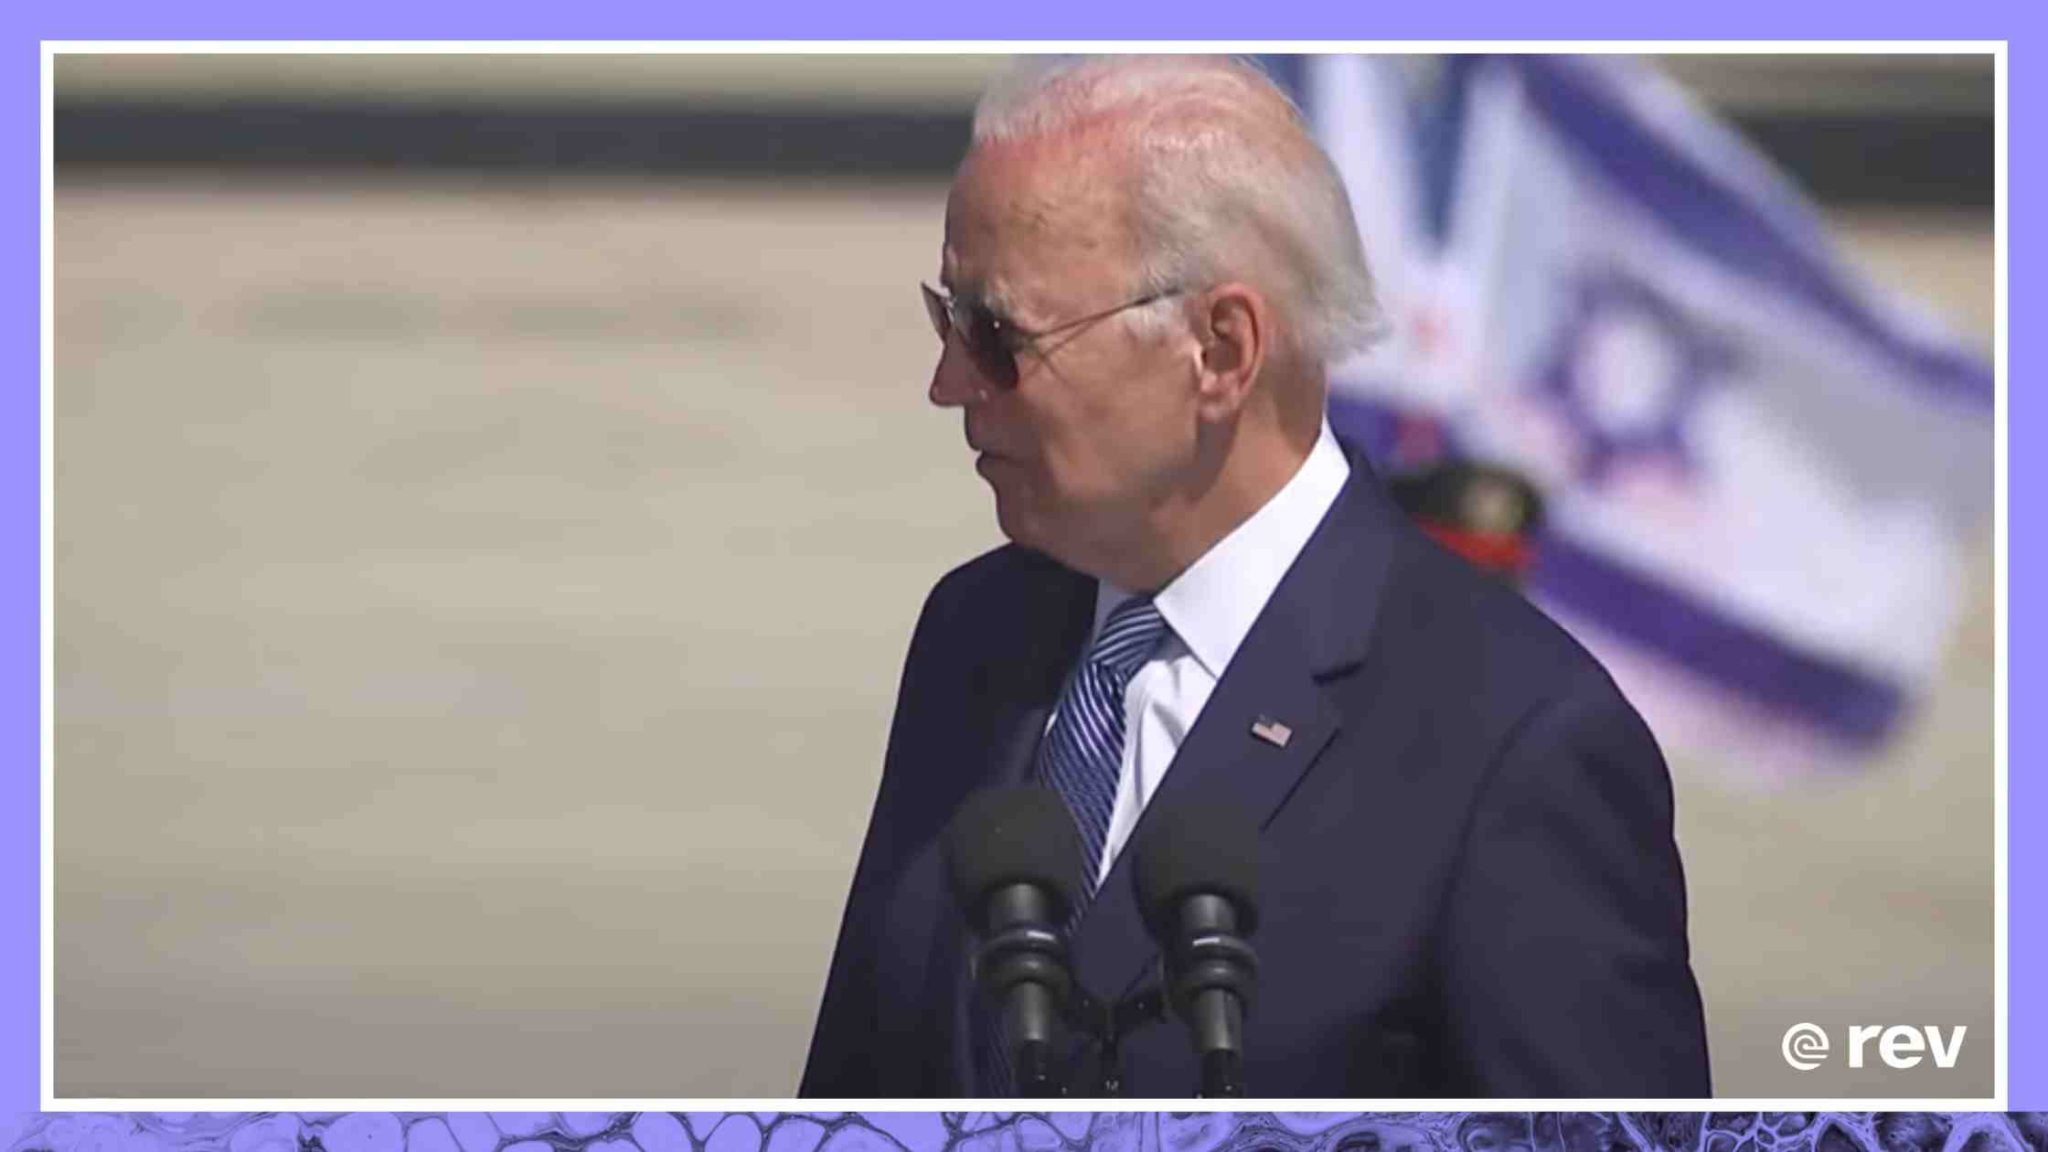 Biden Delivers Remarks From Israel At Start Of Middle East Trip 7/13/22 Transcript